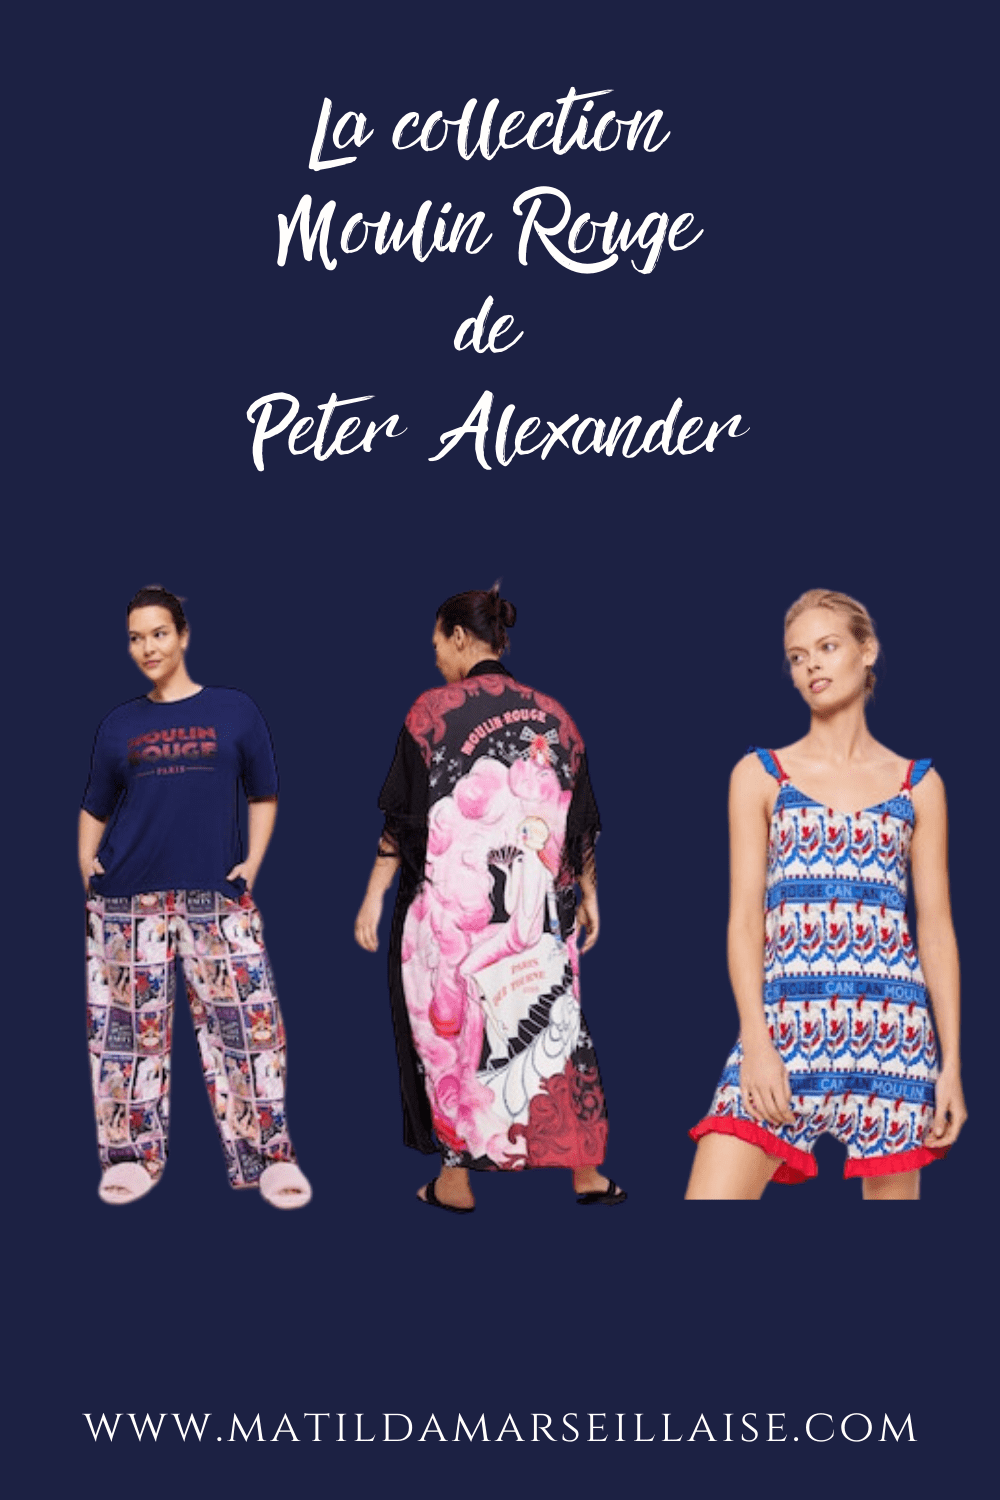 Australian Pyjama King Peter Alexander releases Moulin Rouge collection